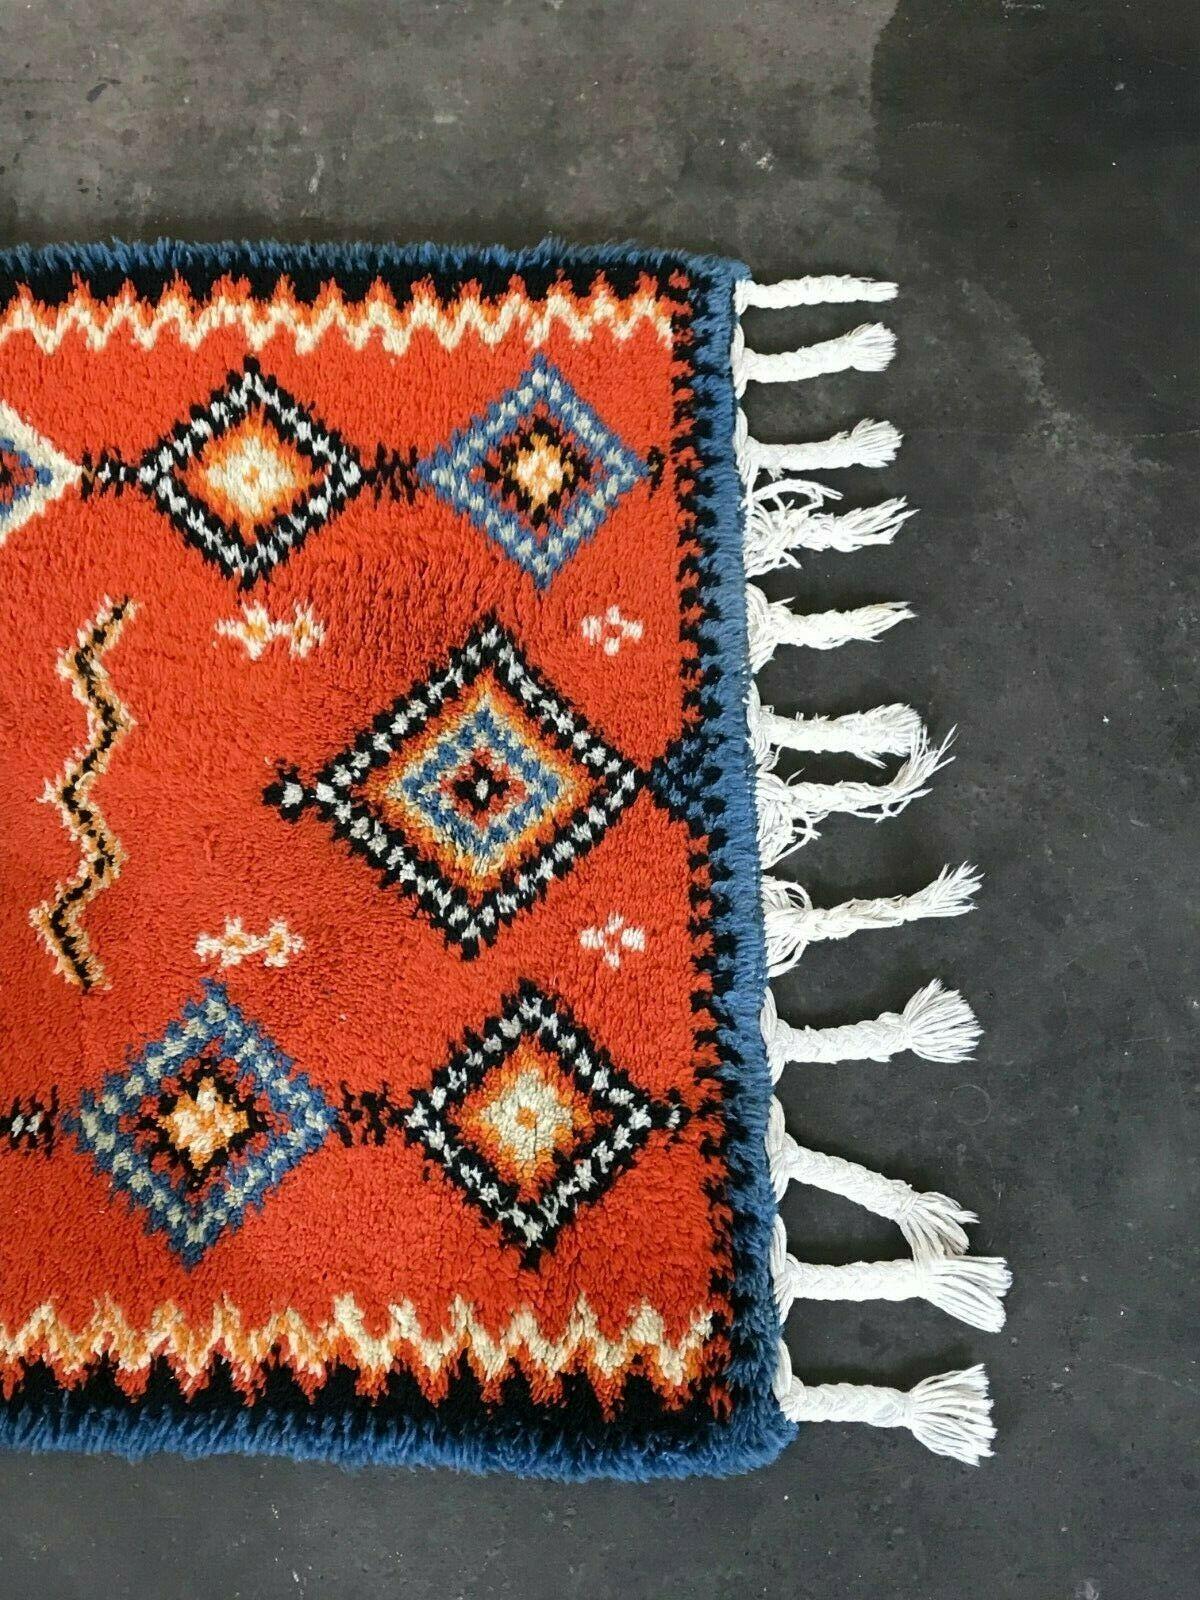 70s carpet patterns